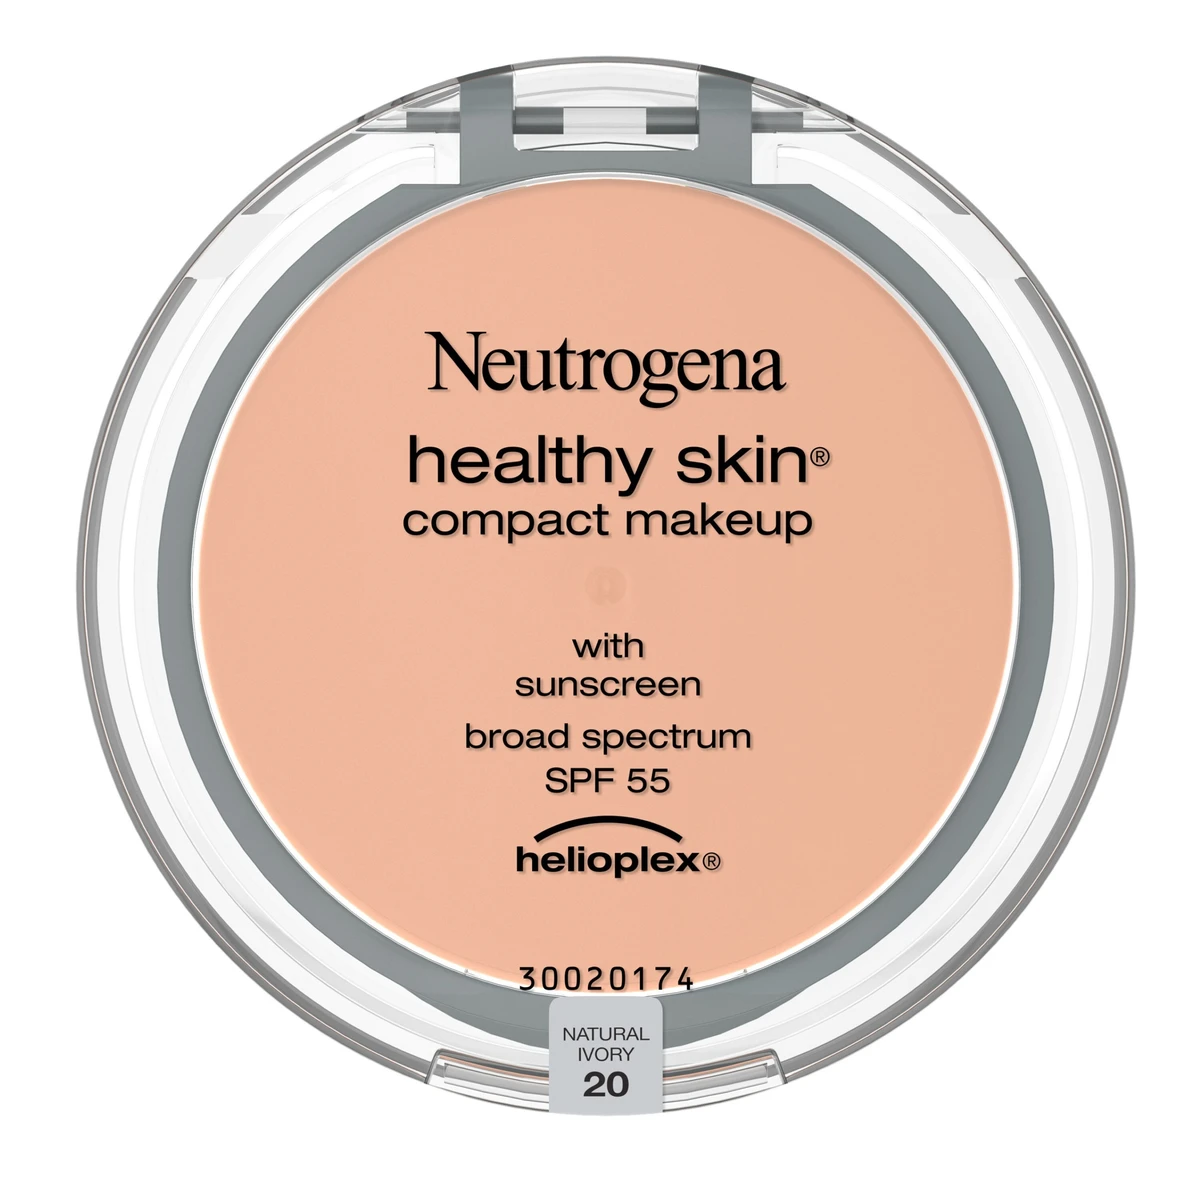 Neutrogena Healthy Skin Compact Makeup Broad Spectrum SPF 55  Light Shades  1.6oz